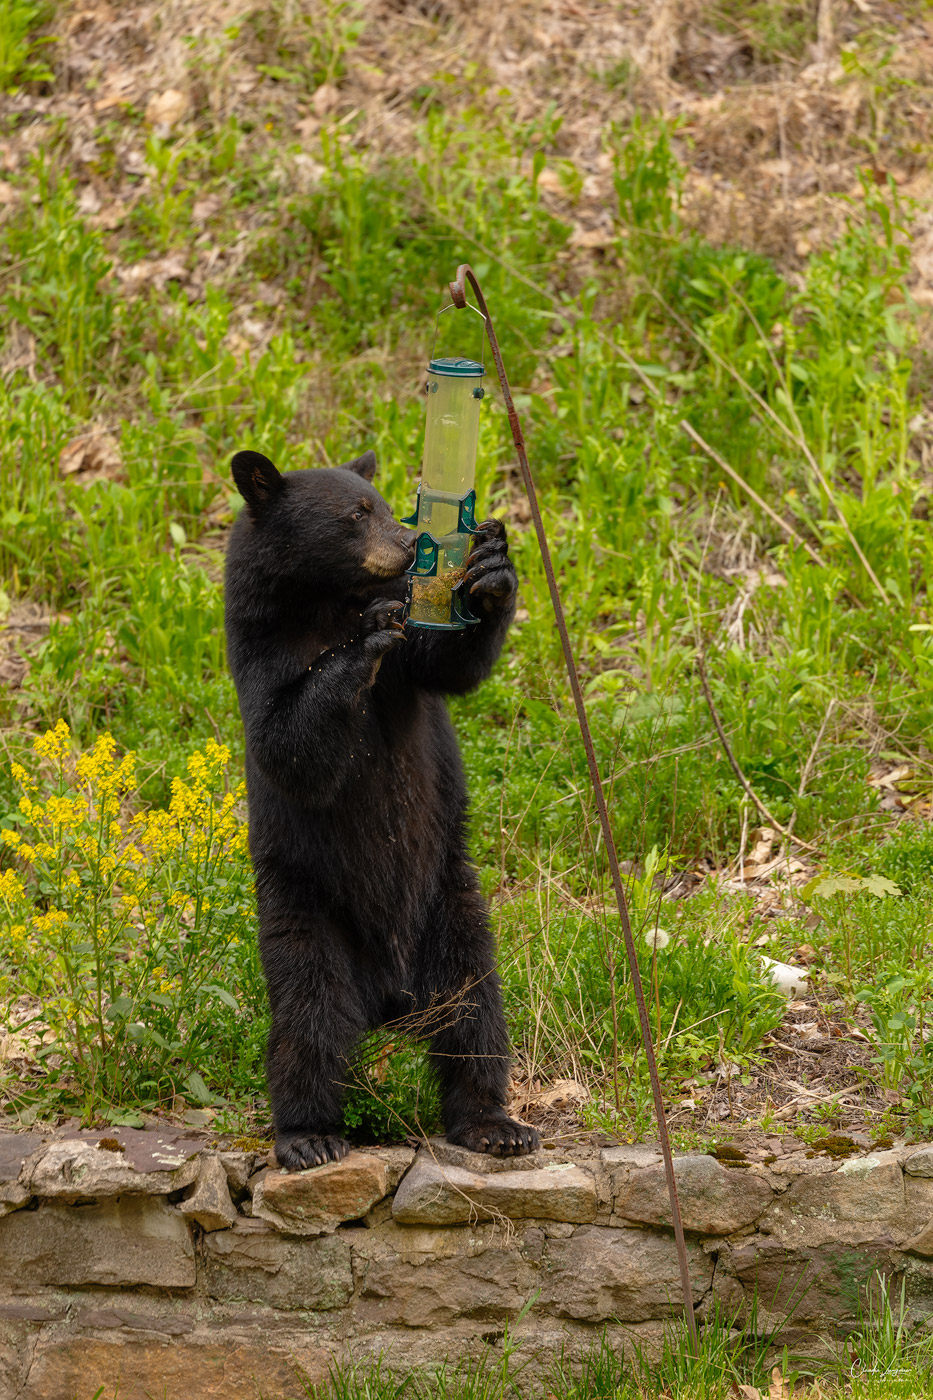 View of black bear feeding from a bird feeder in Pennsylvania.